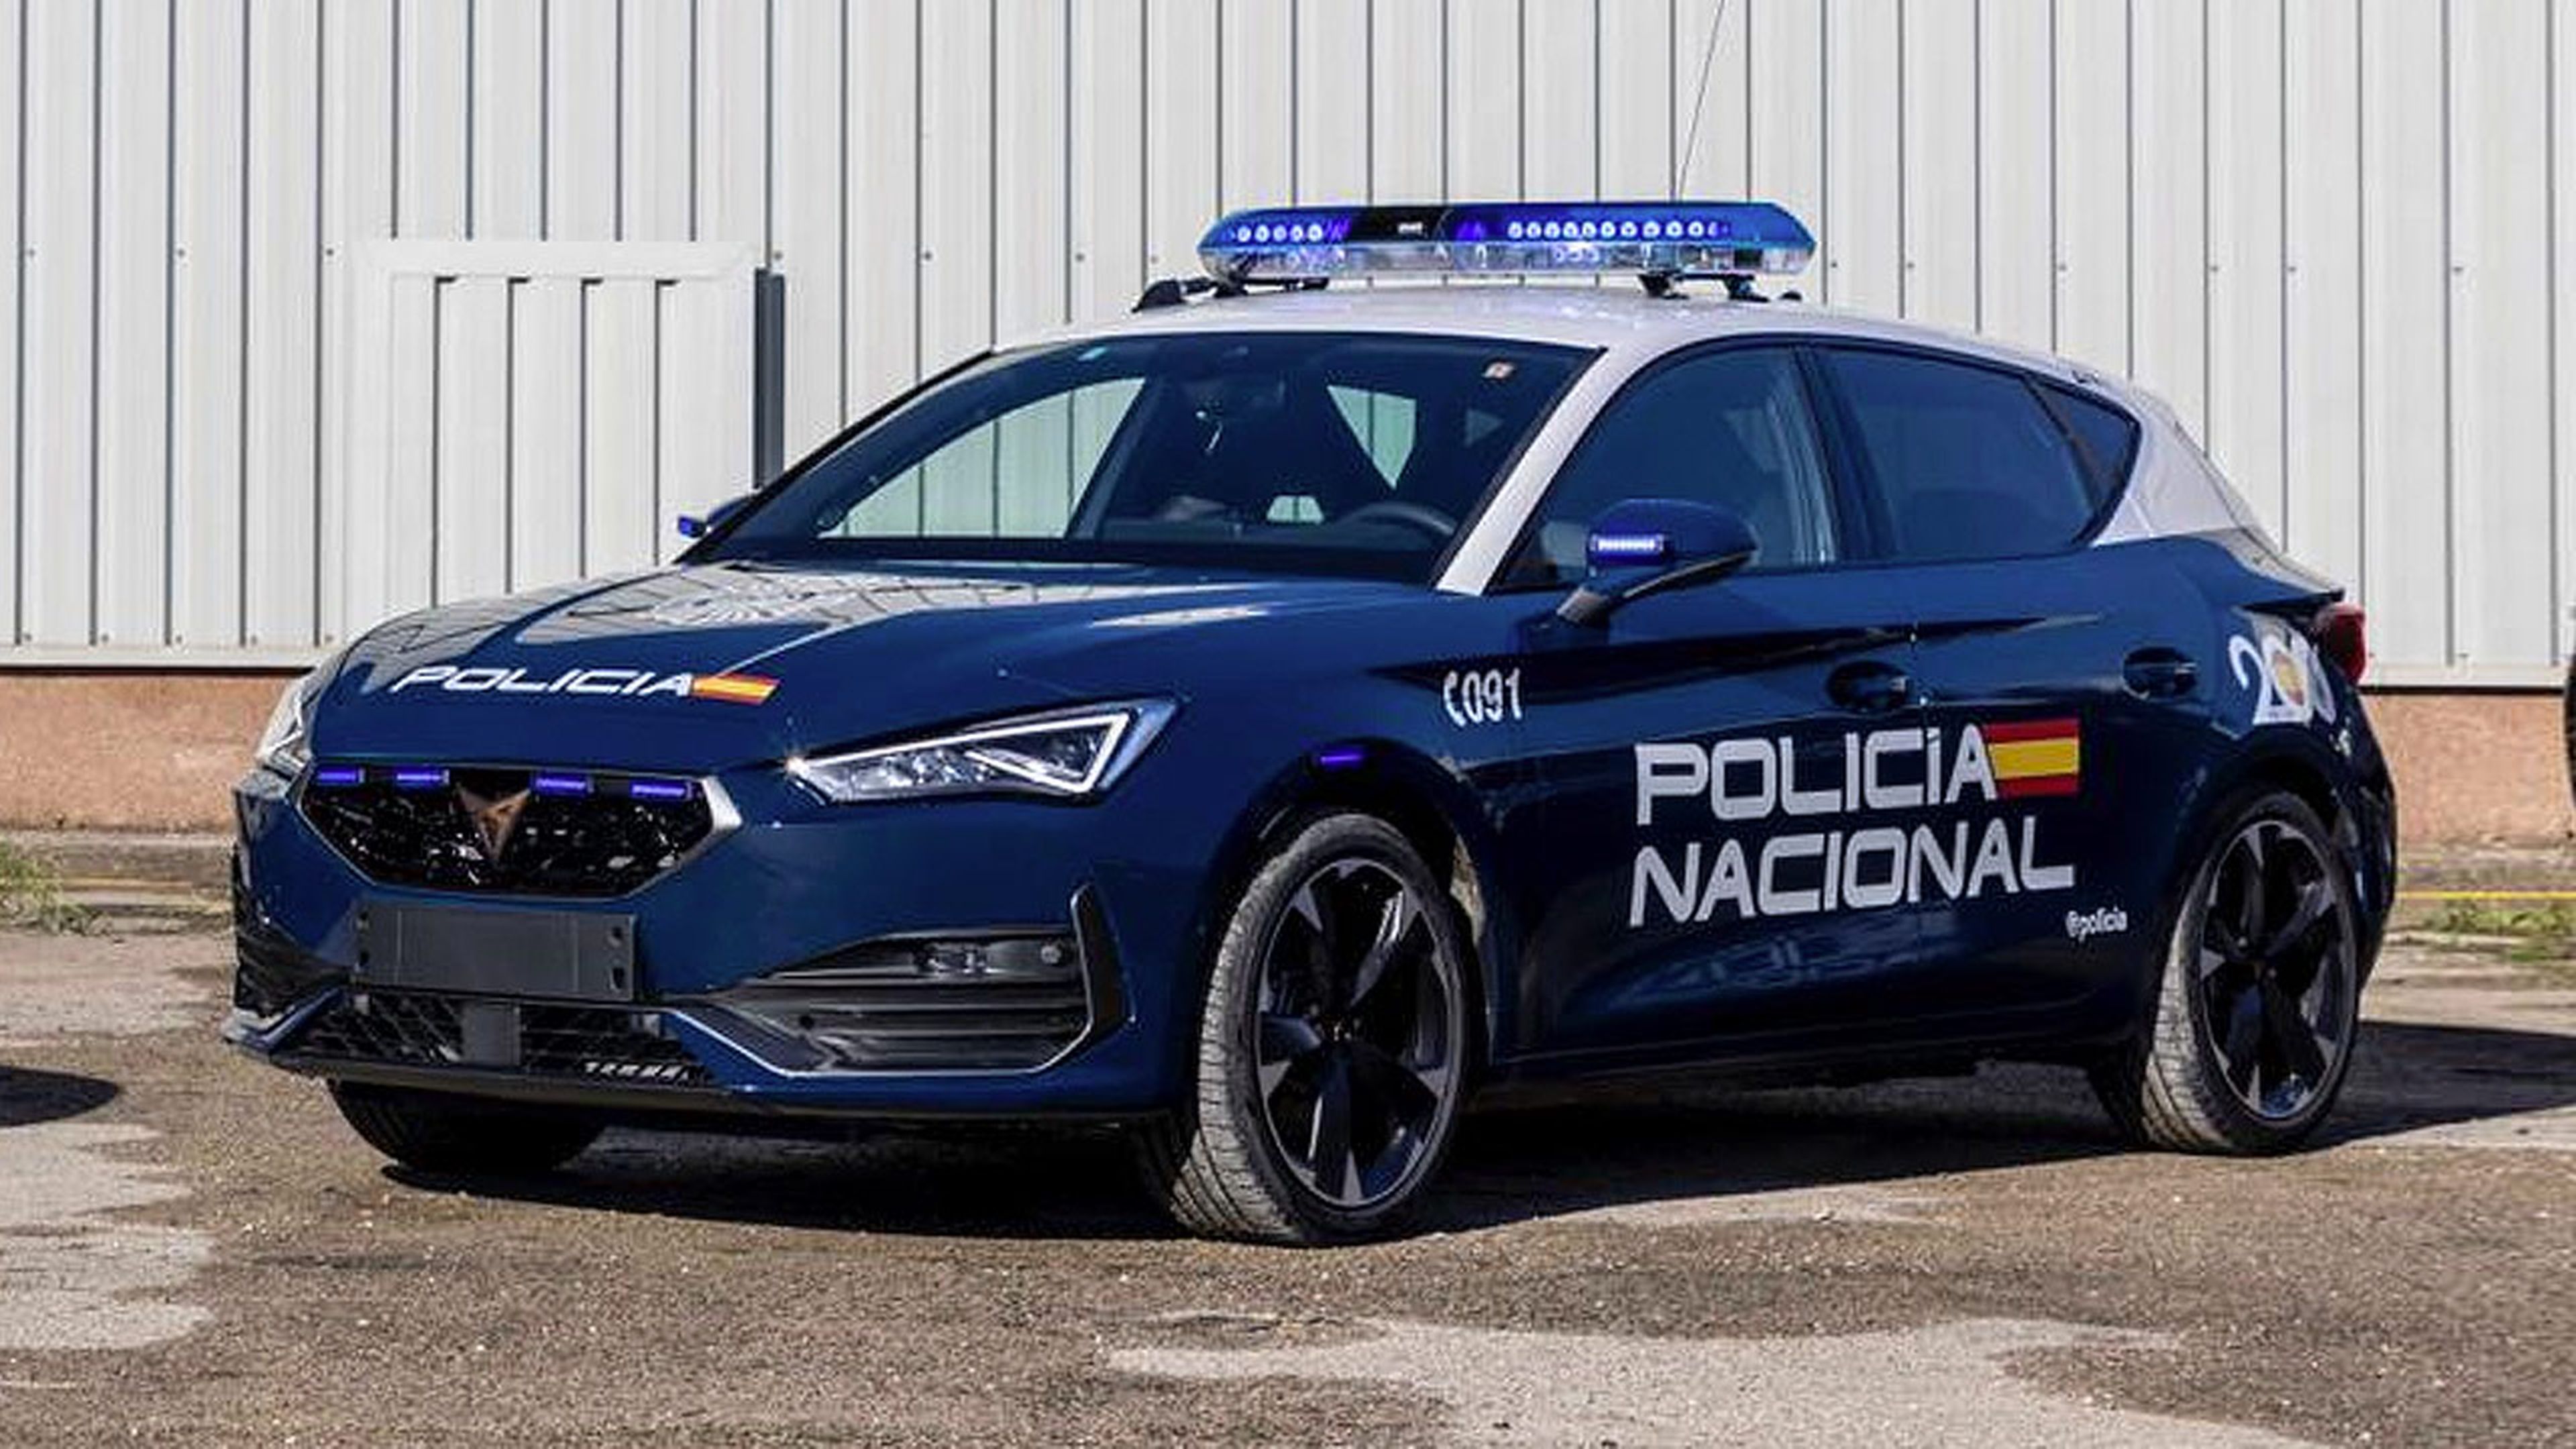 Cupra León Policía Nacional